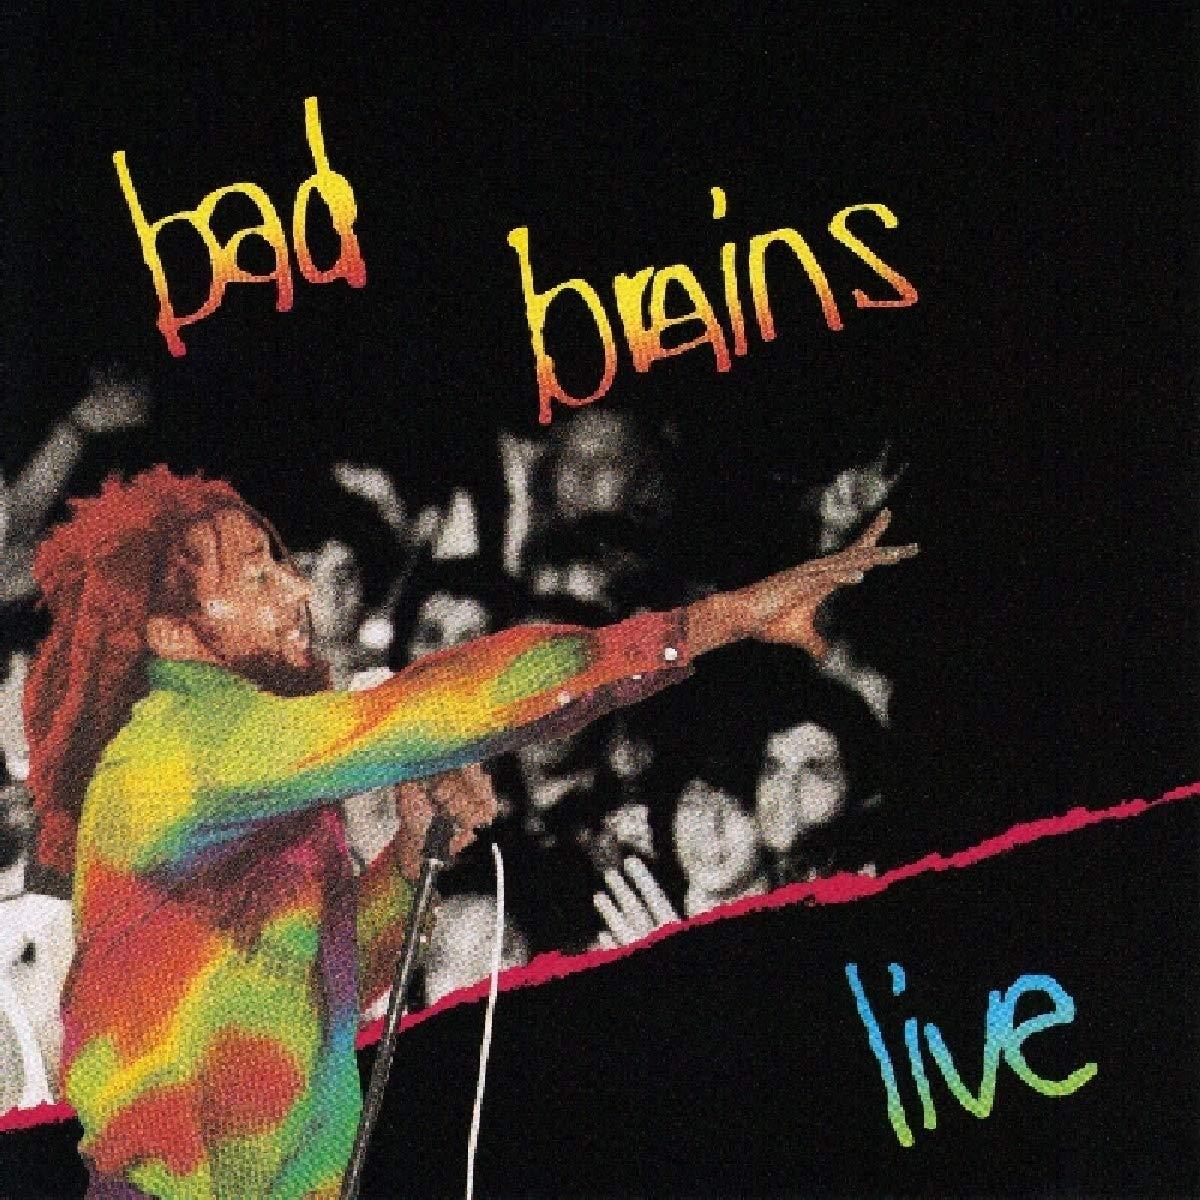 Buy – Bad Brains "Live" 12" – Band & Music Merch – Cold Cuts Merch